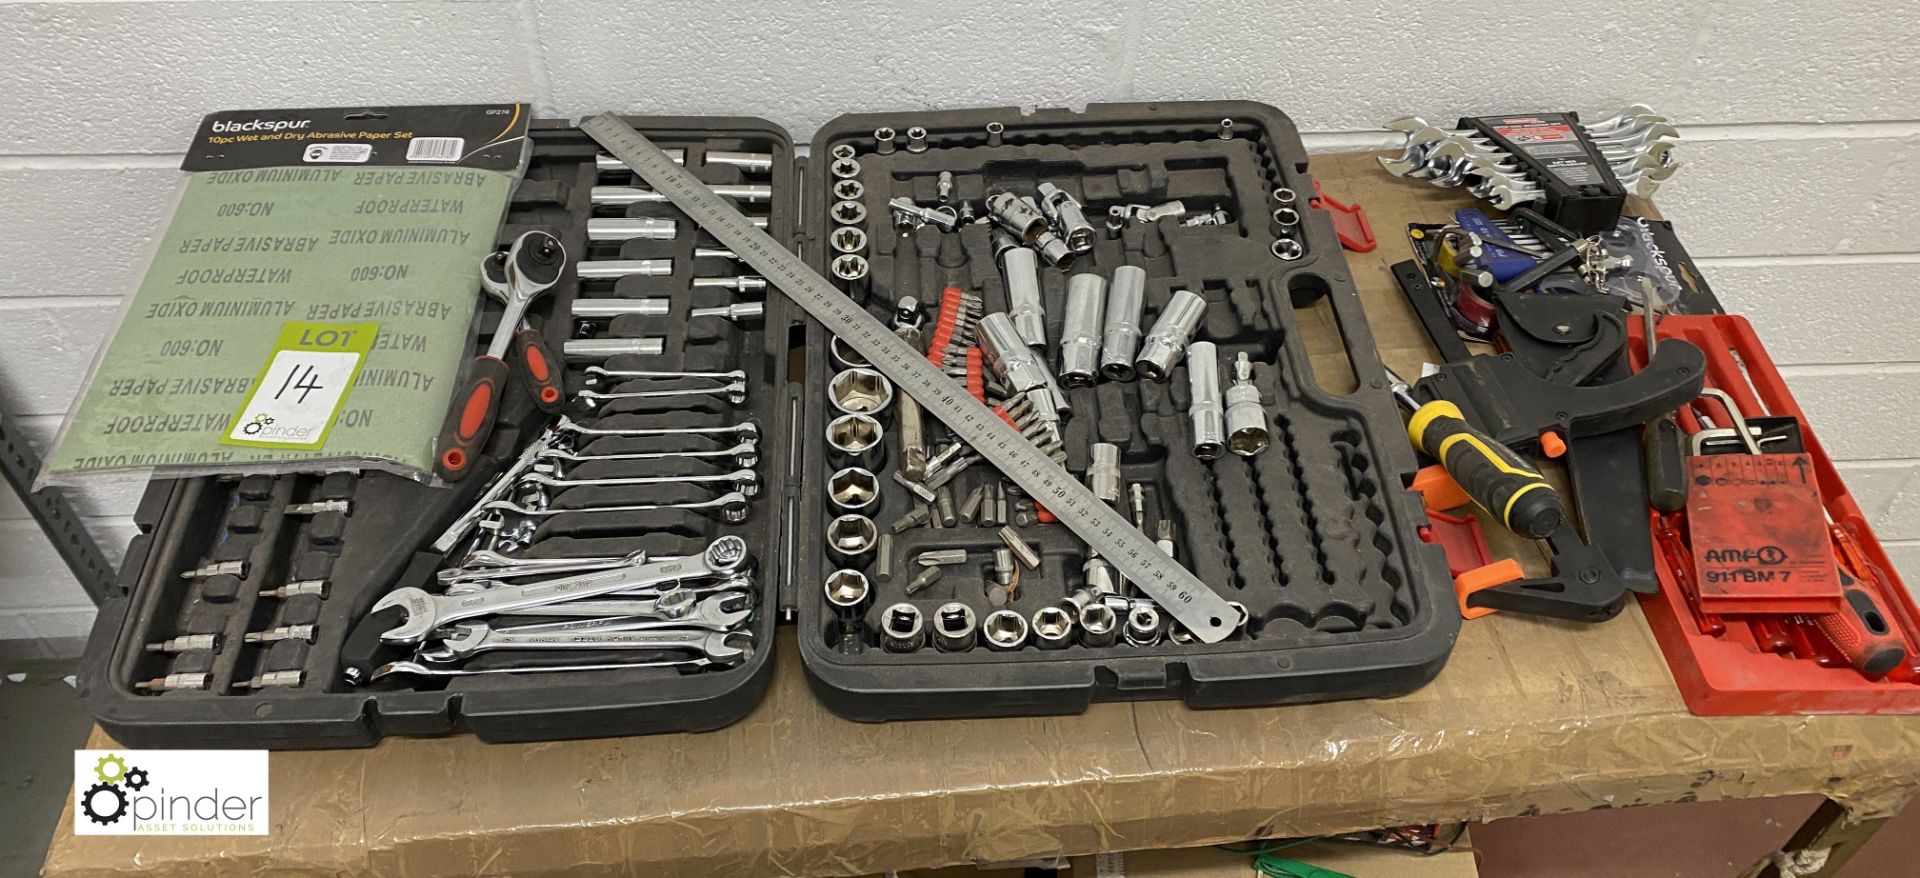 Quantity Hand Tools including sockets, spanners, Allen keys, screwdrivers, etc